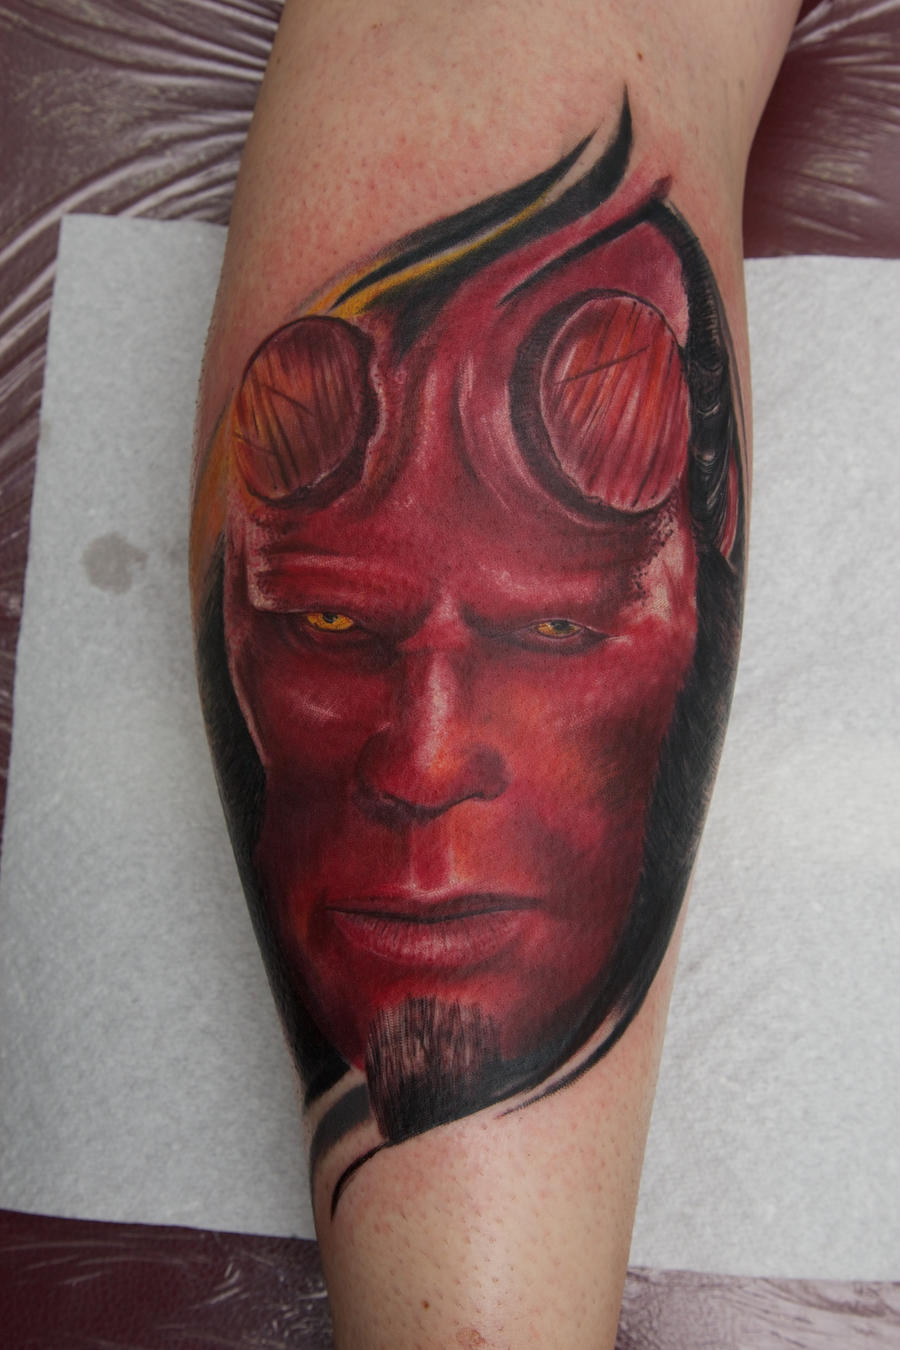 hellboy tattoo by graynd on DeviantArt